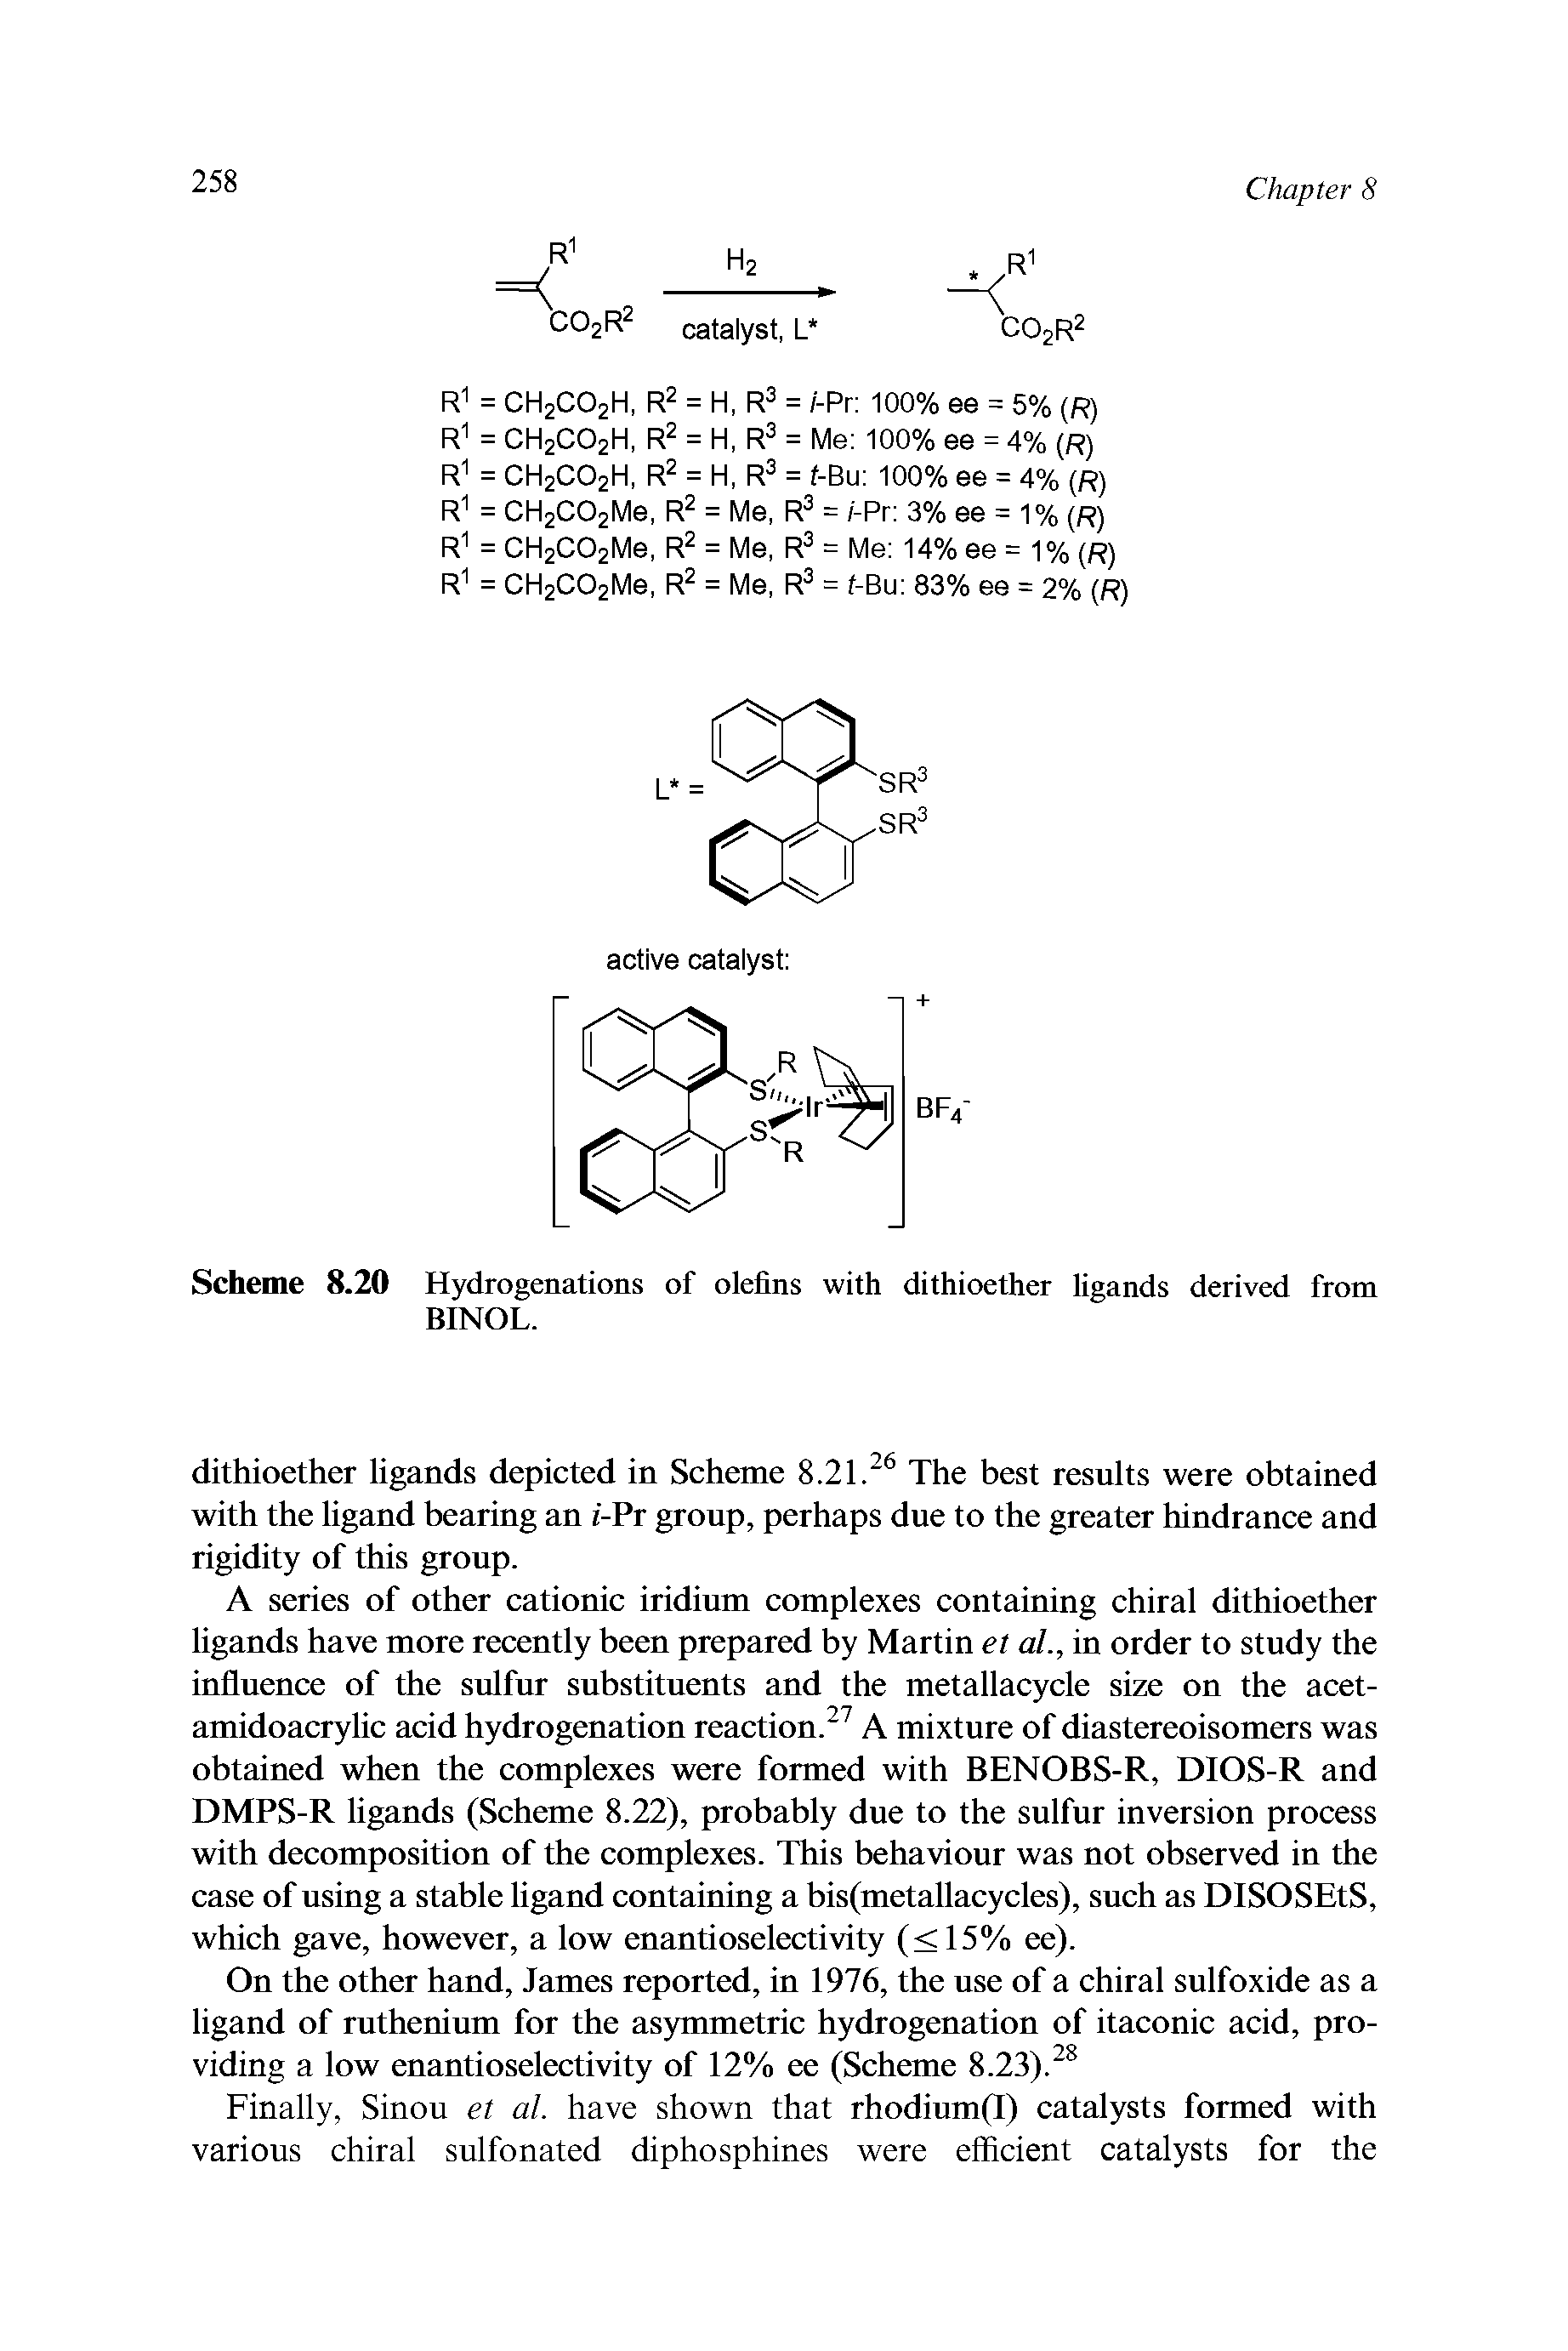 Scheme 8.20 Hydrogenations of olefins with dithioether ligands derived from BINOL.